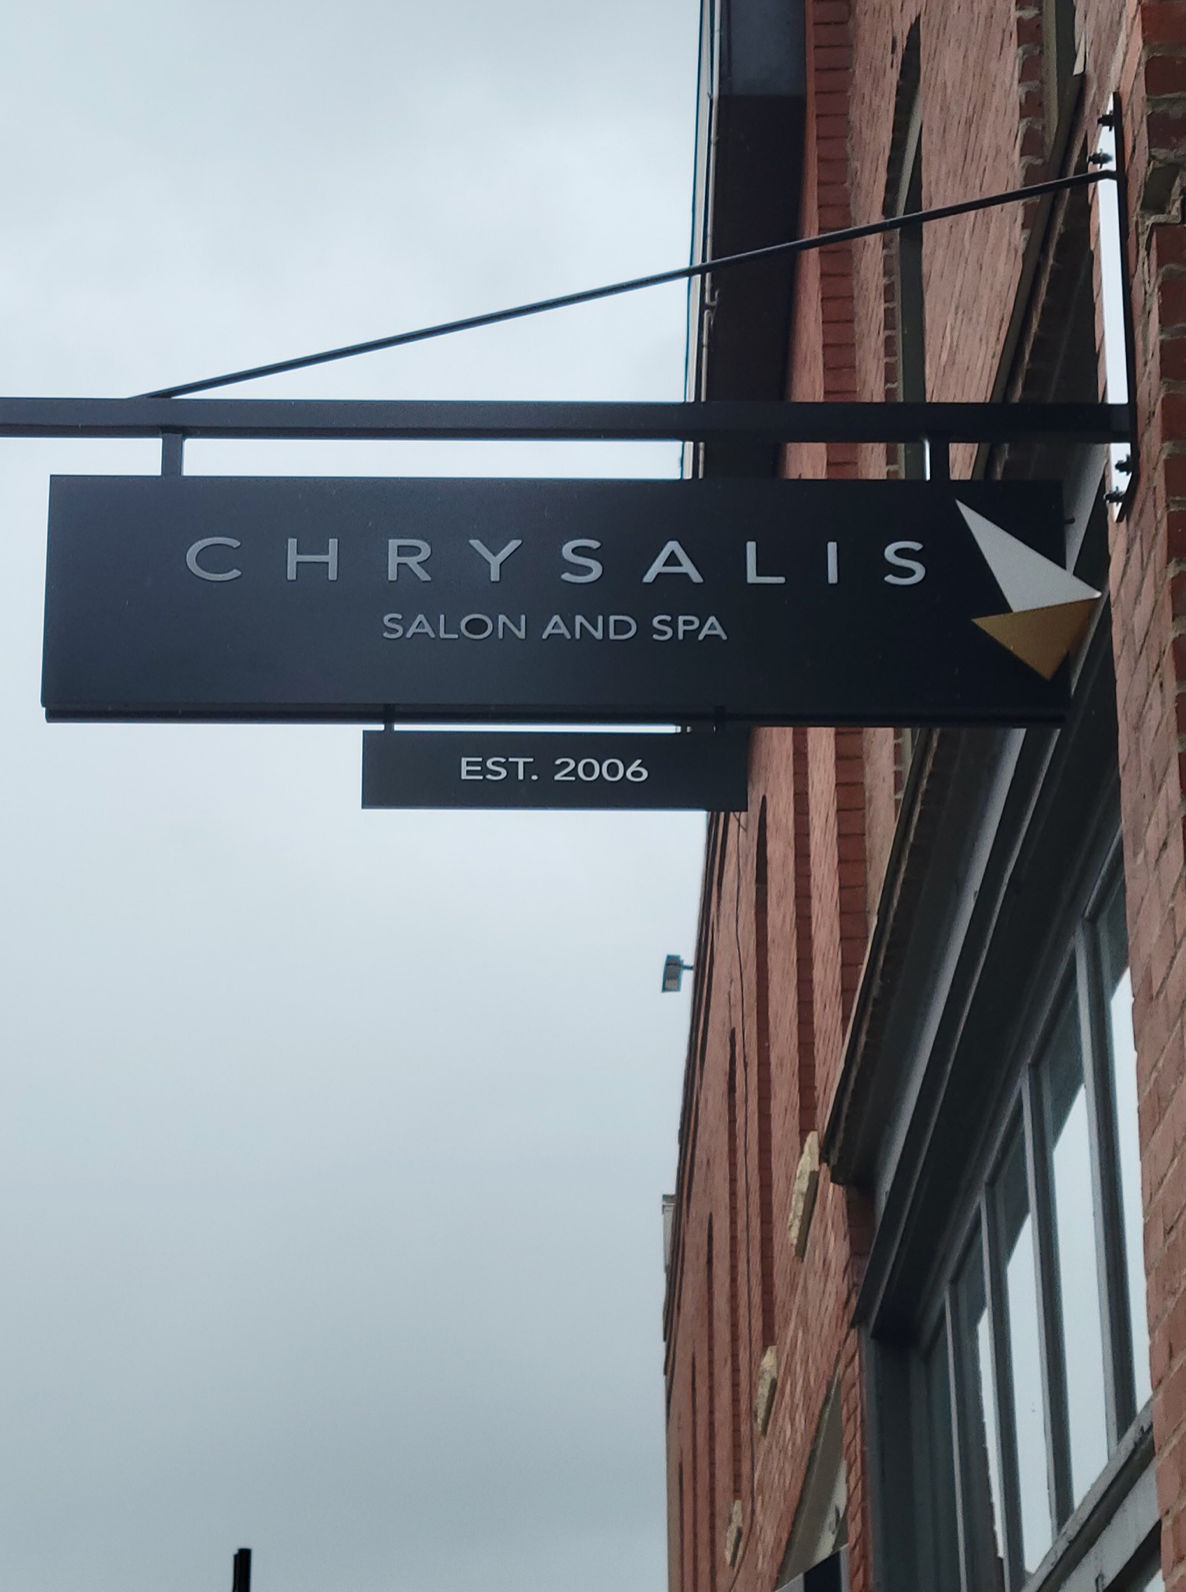 Image of Chrysalis storefront sign